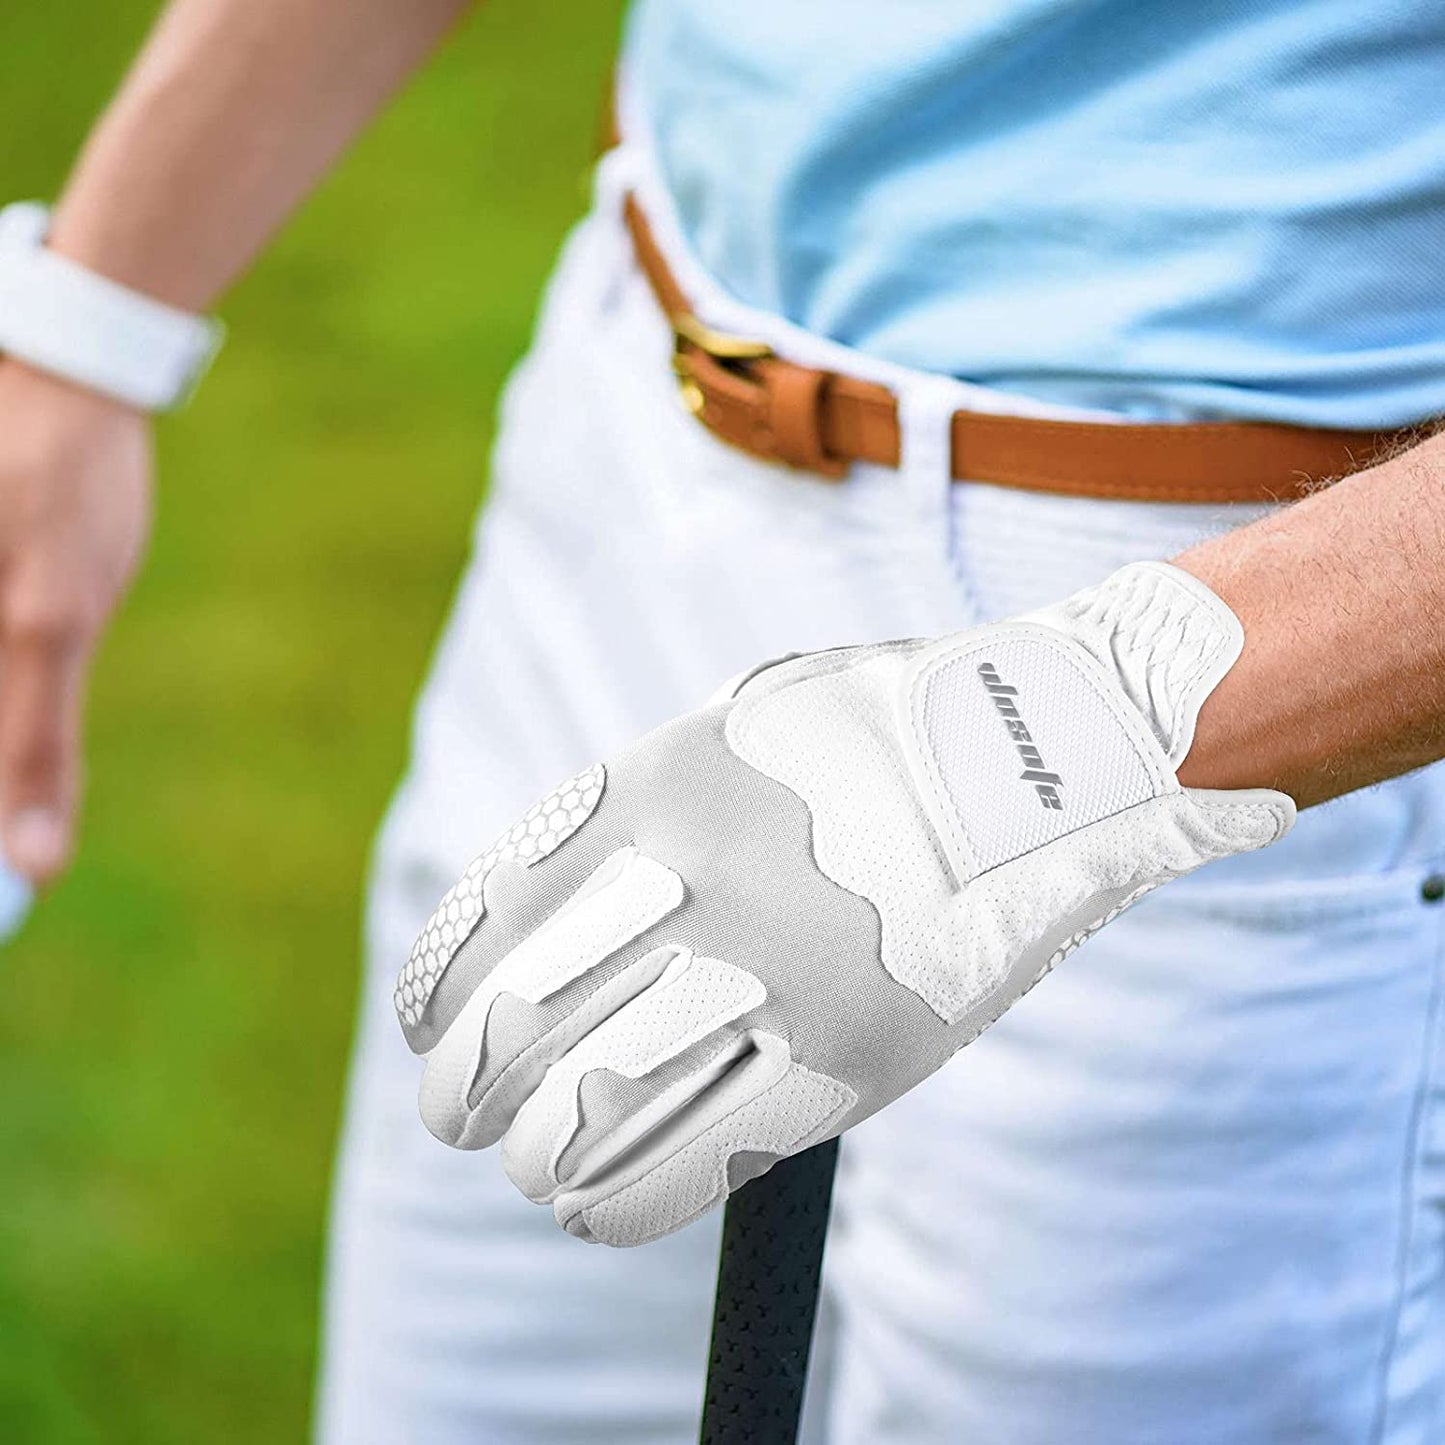 wosofe Golf Gloves for Men’s Left Hand Lycra Korean Nanometer Grip Soft Comfortable Pack of 2